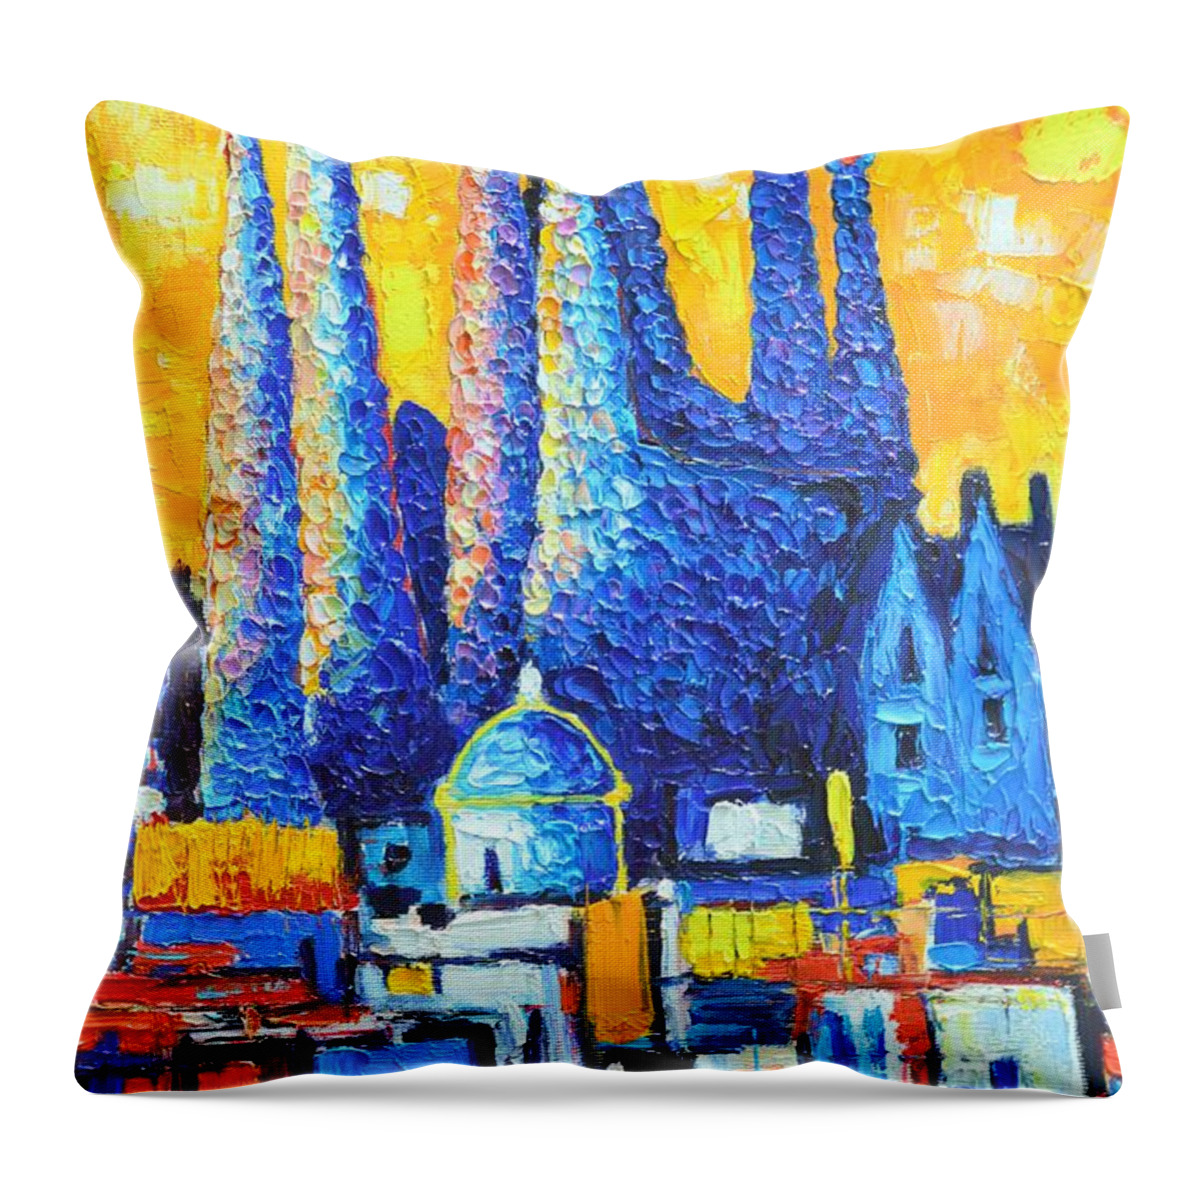 Sagrada Throw Pillow featuring the painting Barcelona - Abstract Sagrada Familia by Ana Maria Edulescu